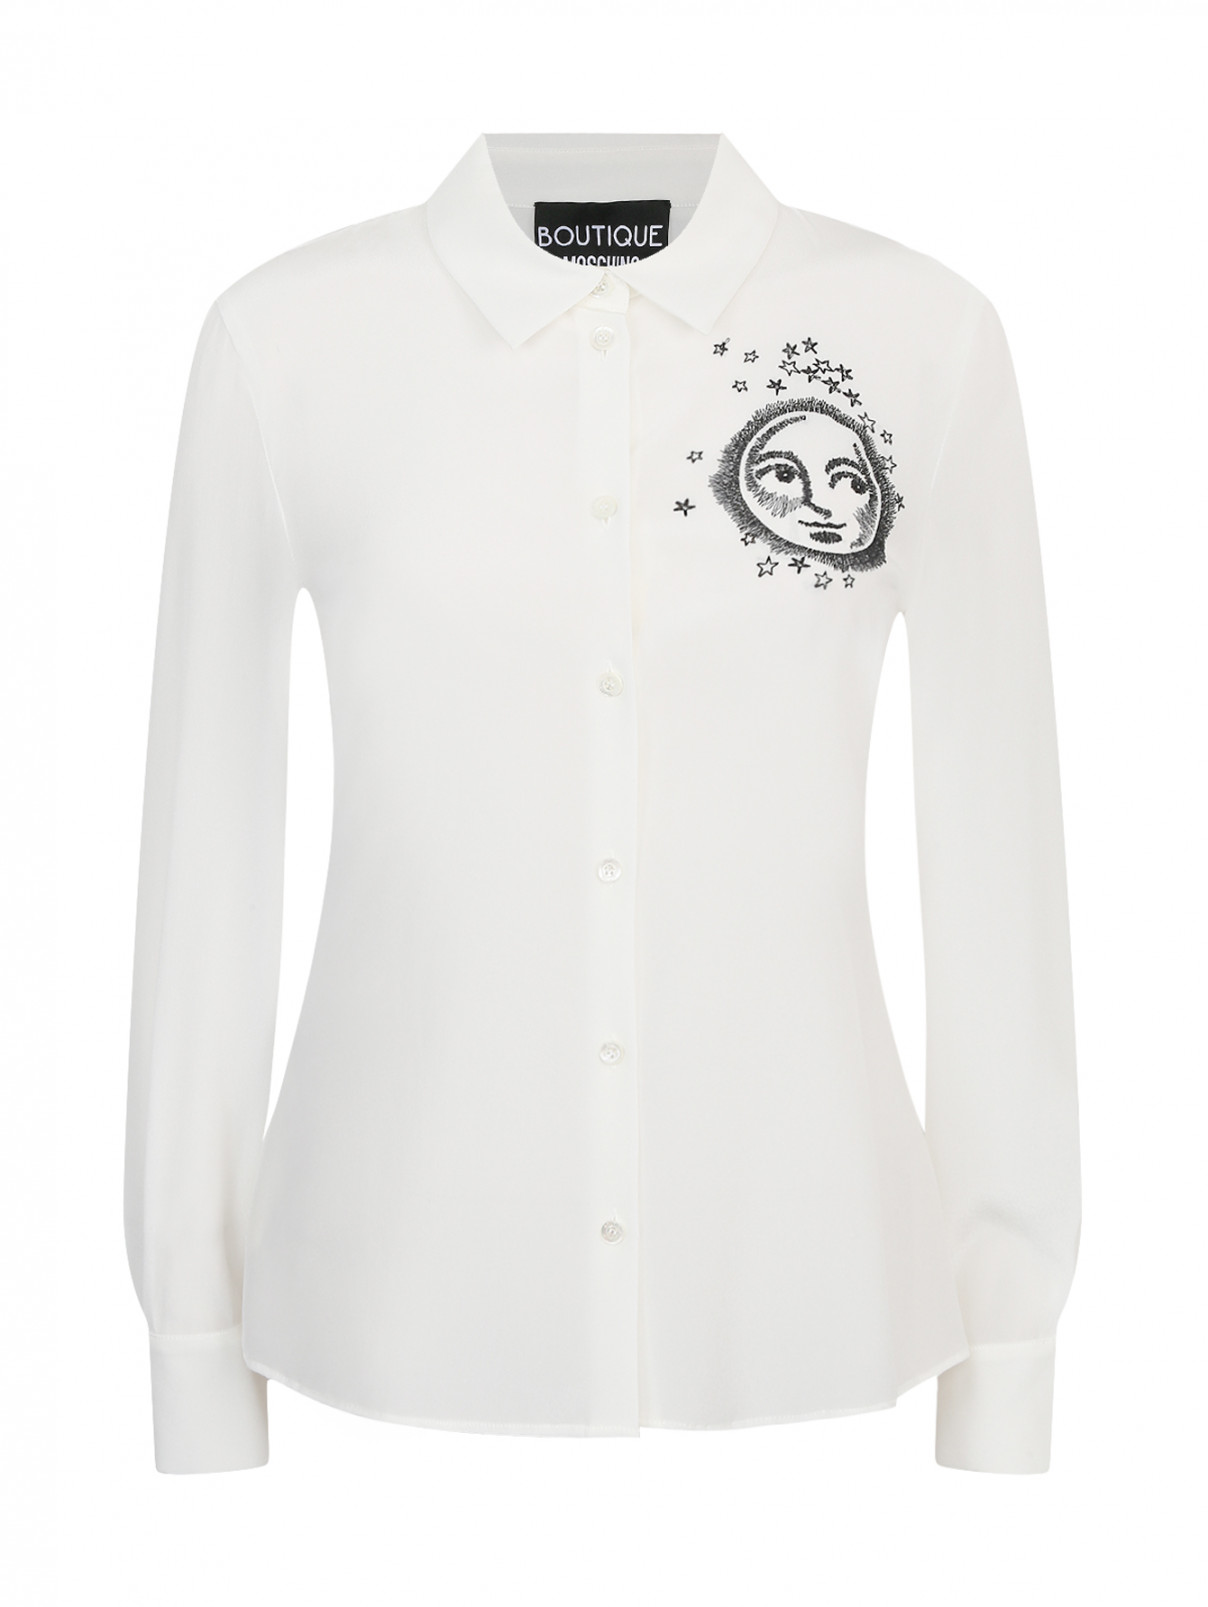 Блуза из шелка с узором Moschino Boutique  –  Общий вид  – Цвет:  Белый